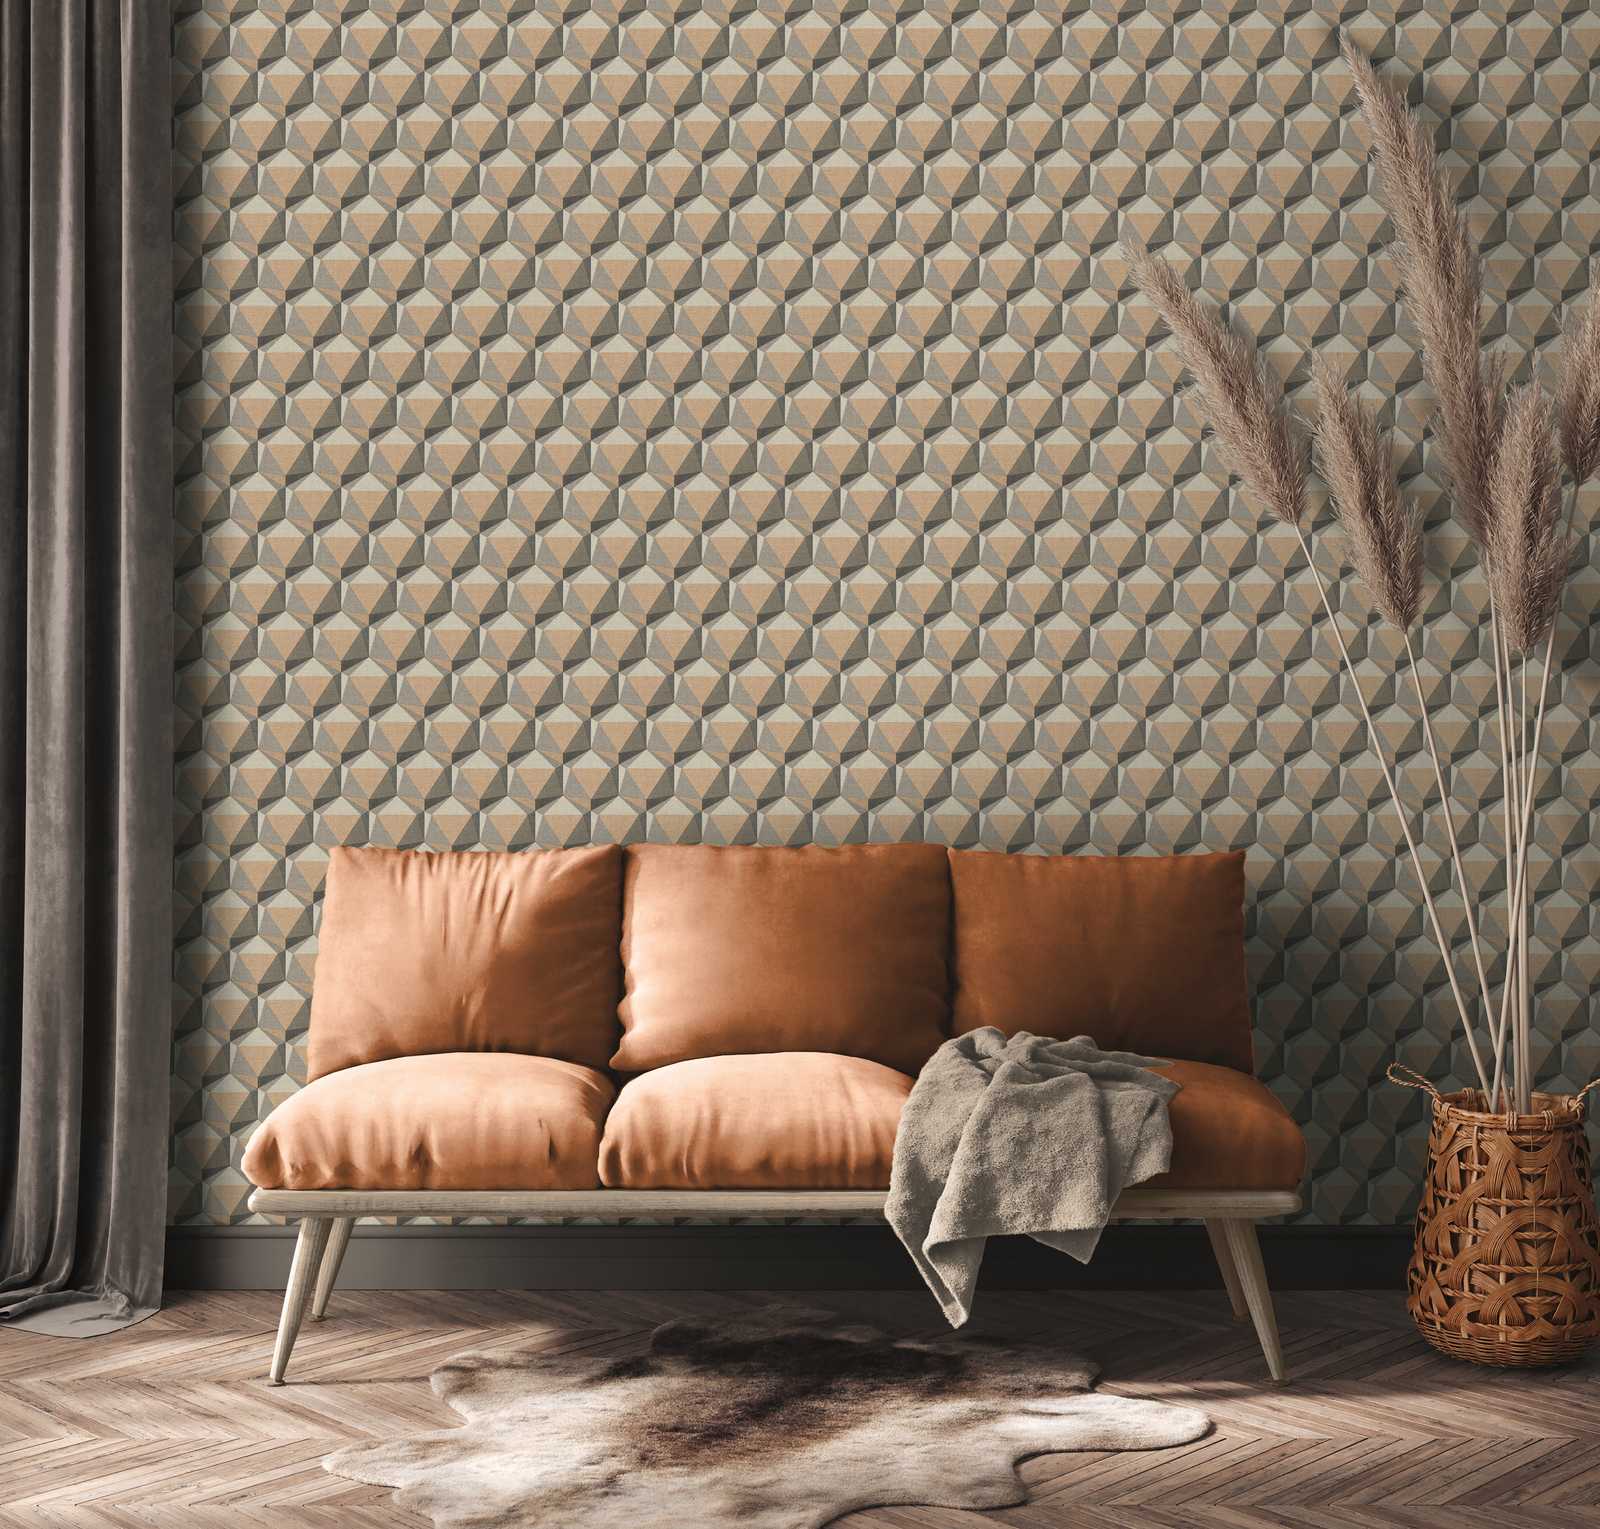             3D wallpaper with graphic pattern in retro look - beige, cream, grey
        